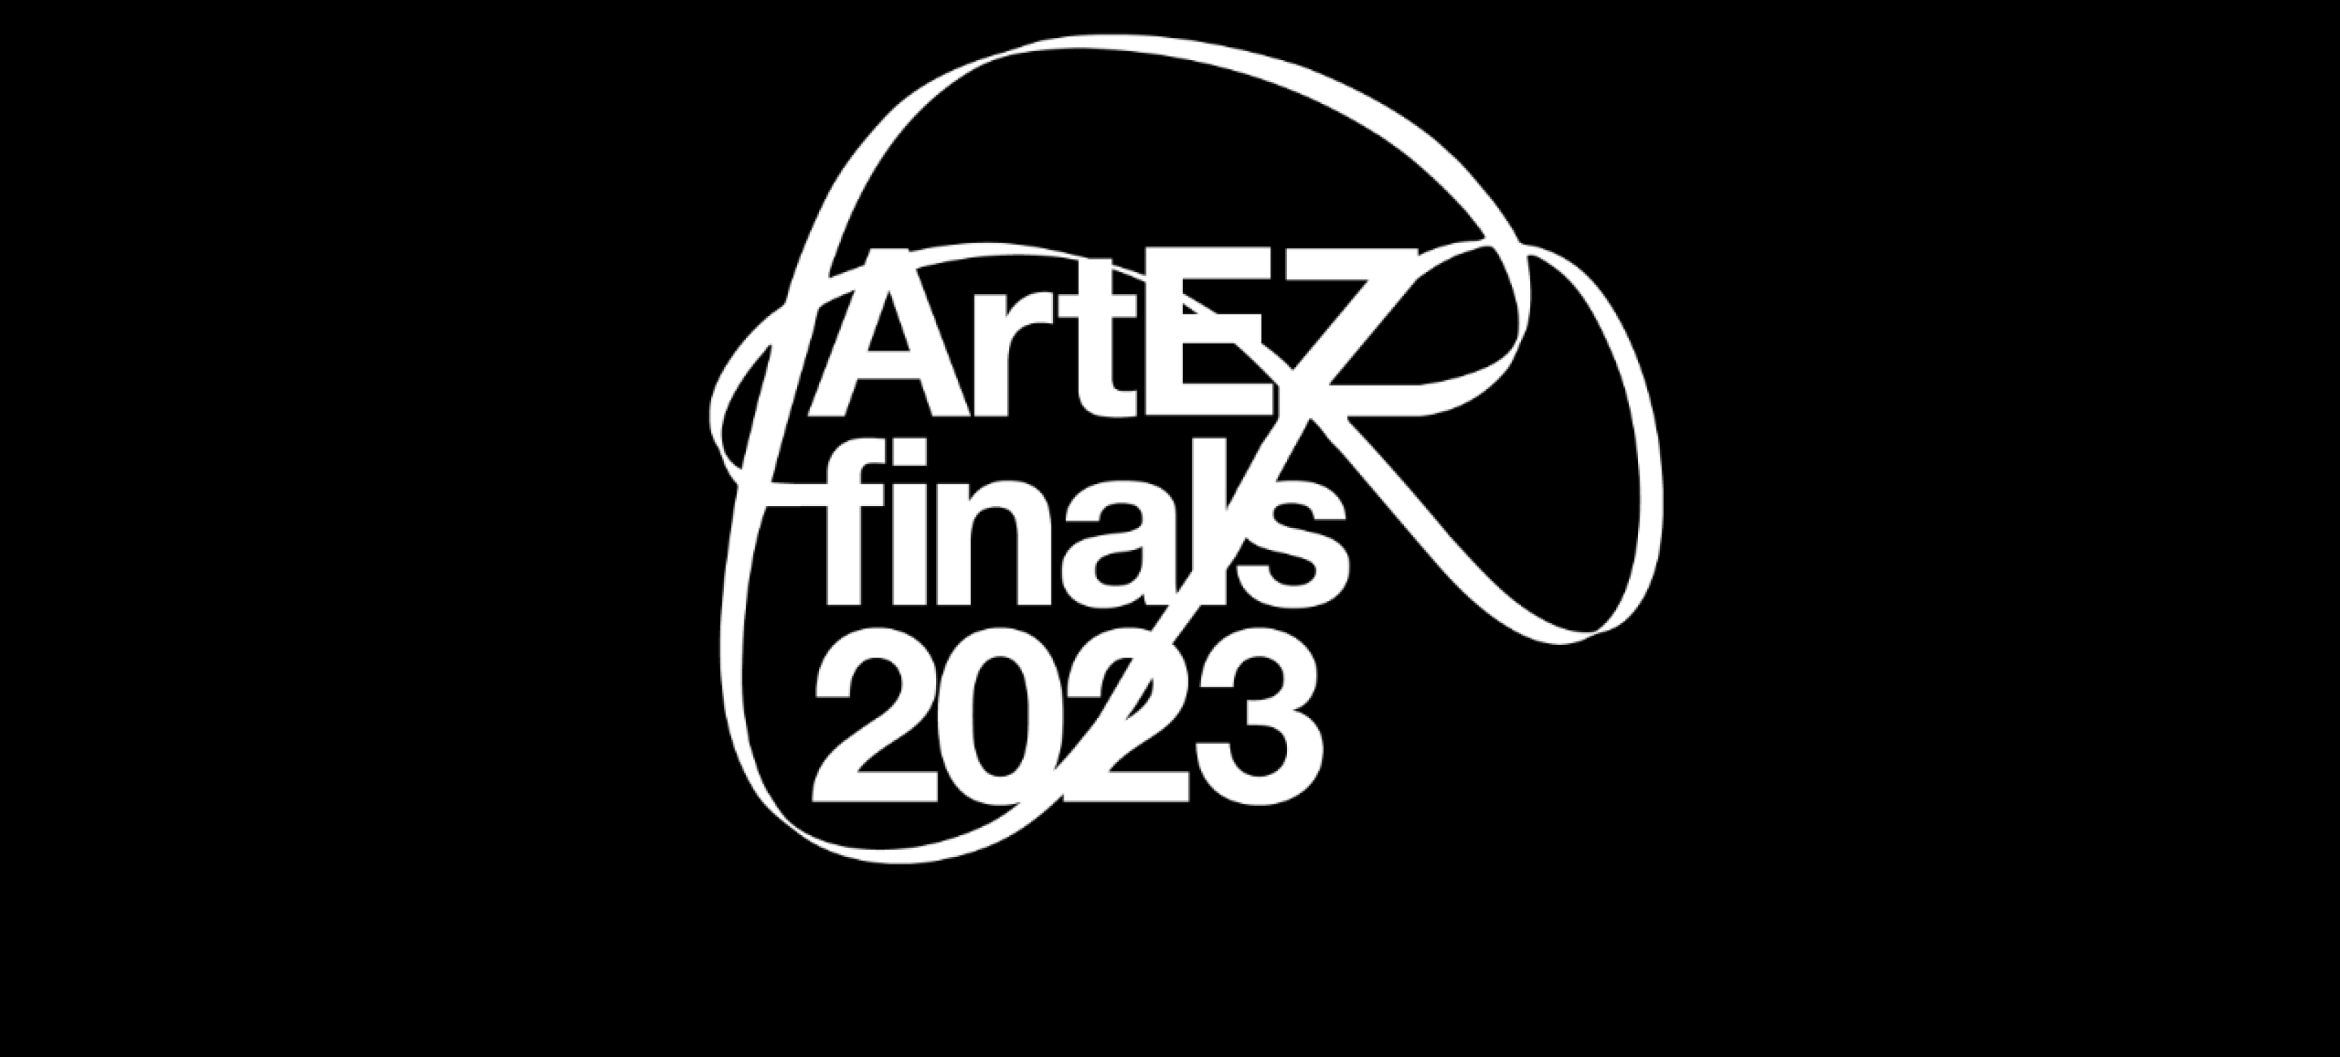 It&#039;s almost here: ArtEZ finals 2023!